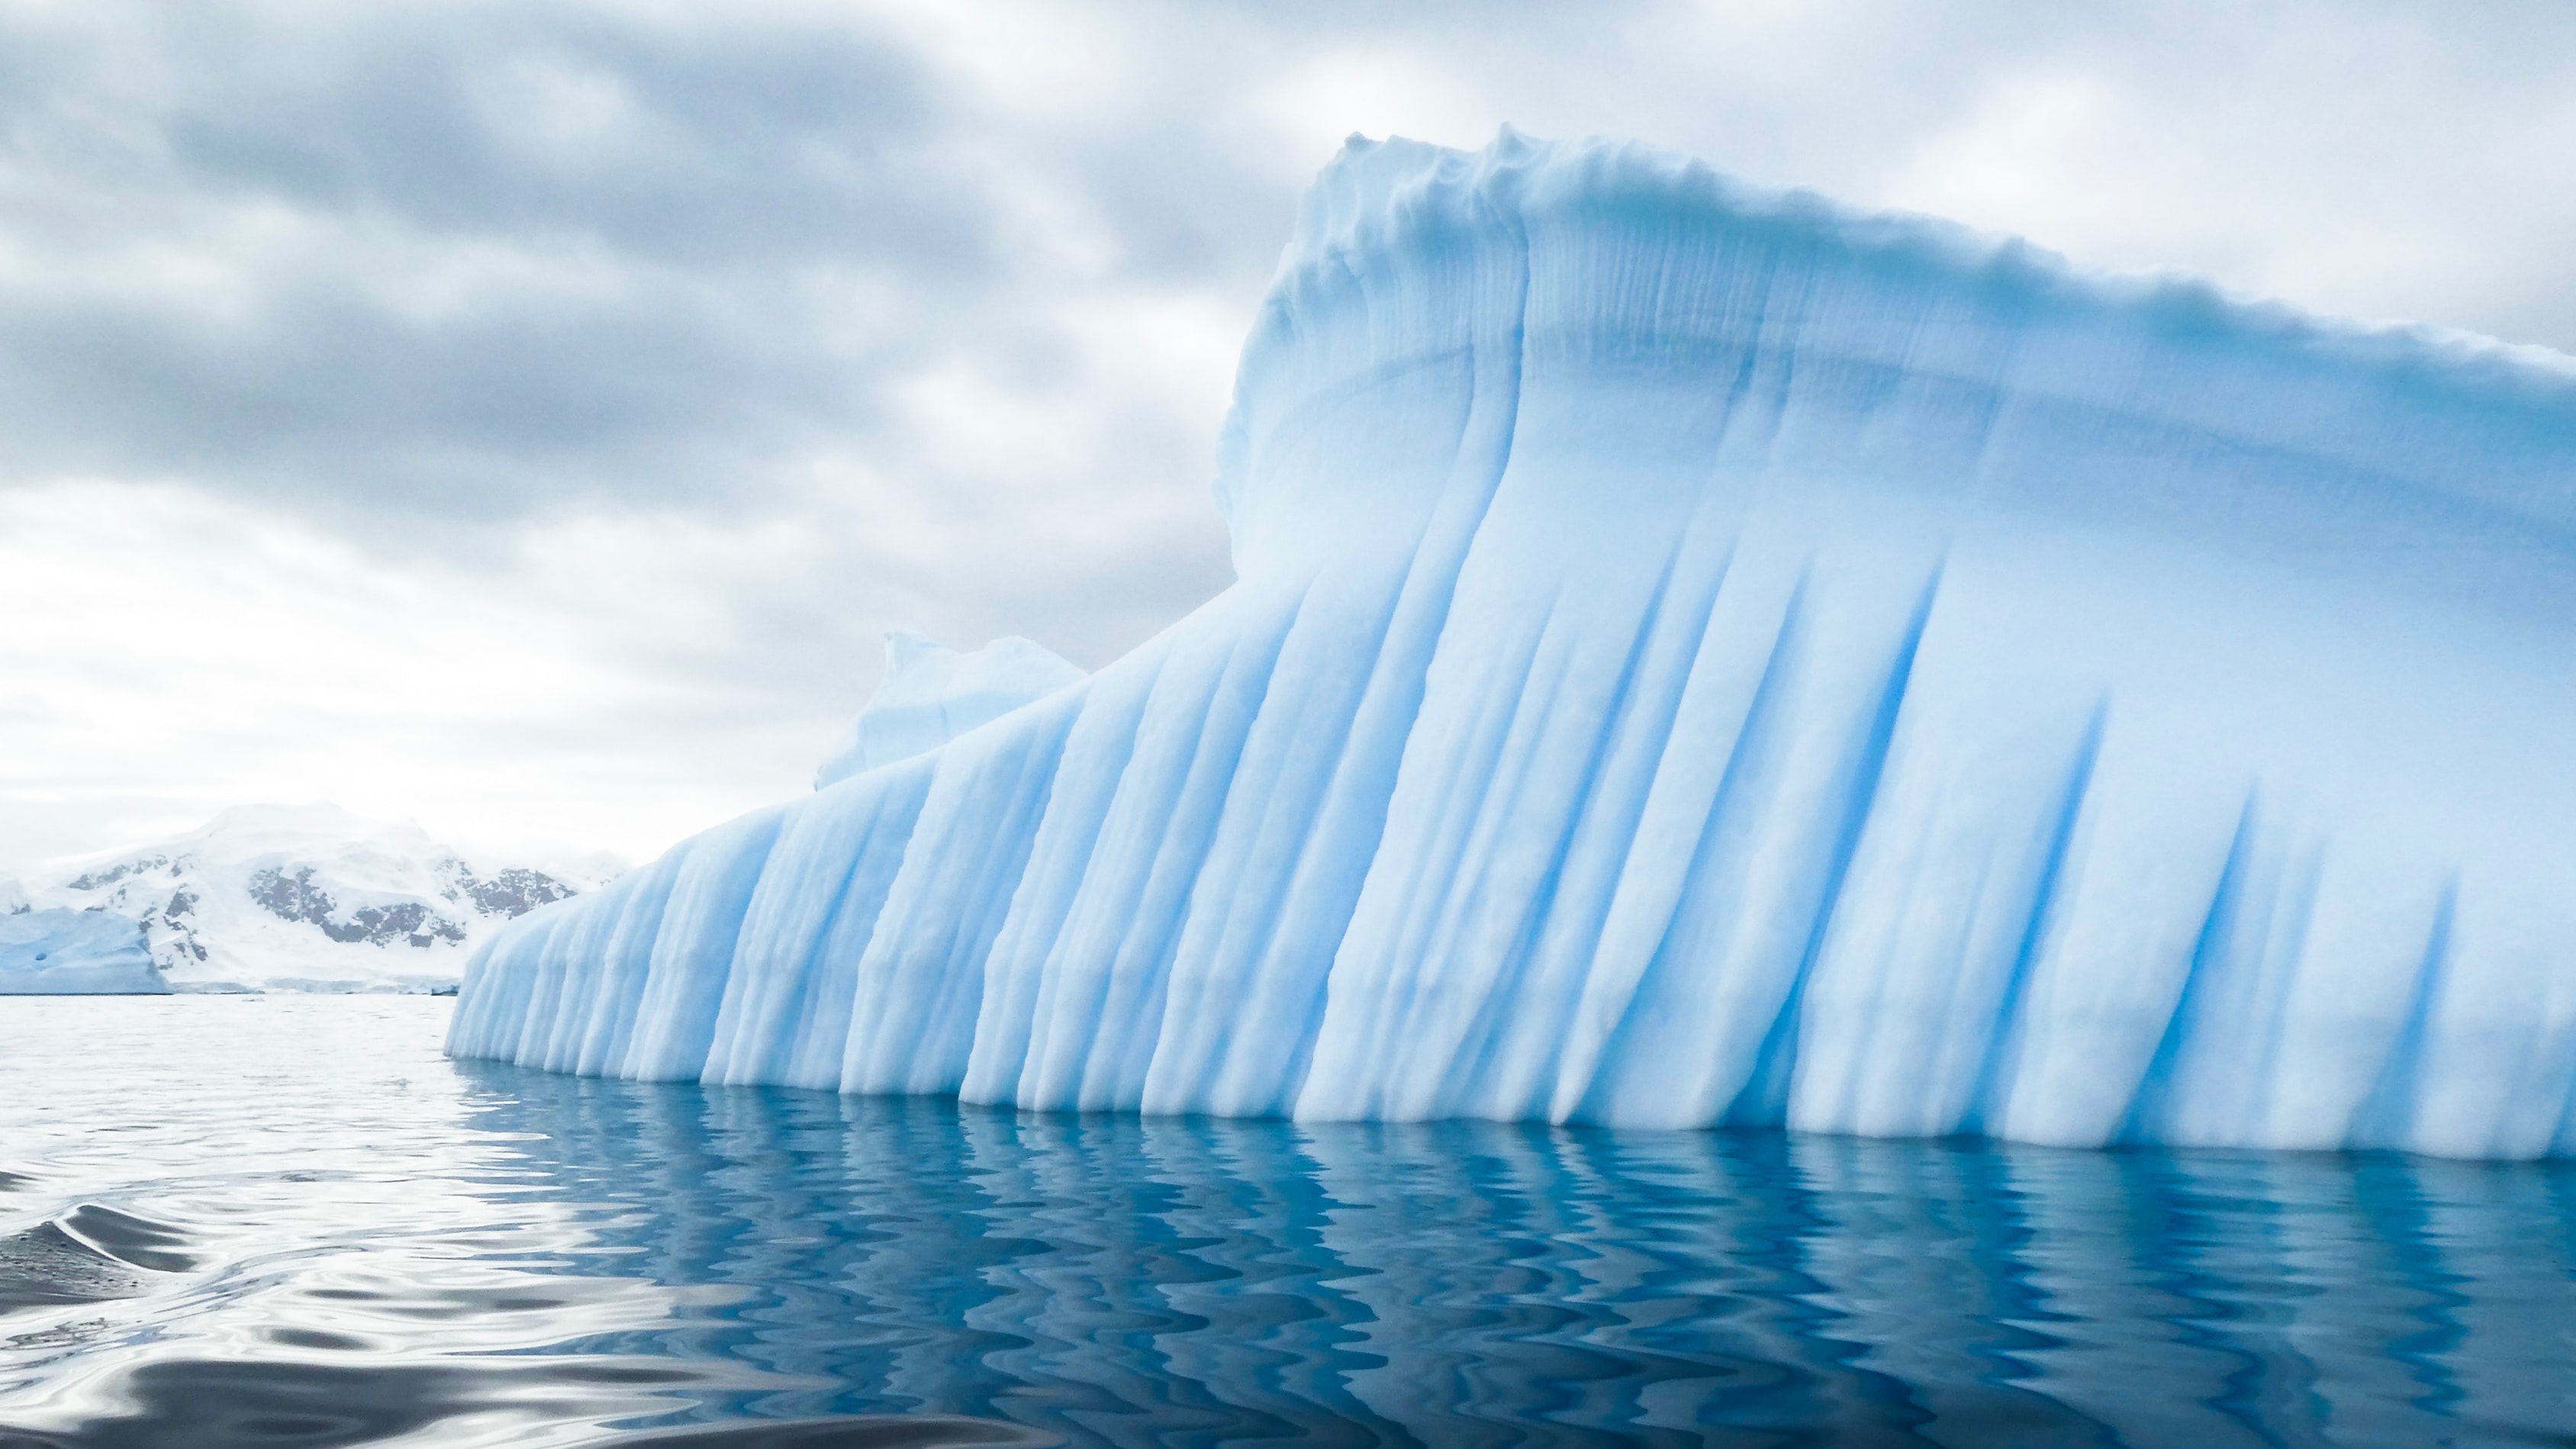 Iceberg in water photo by Derek Oyen